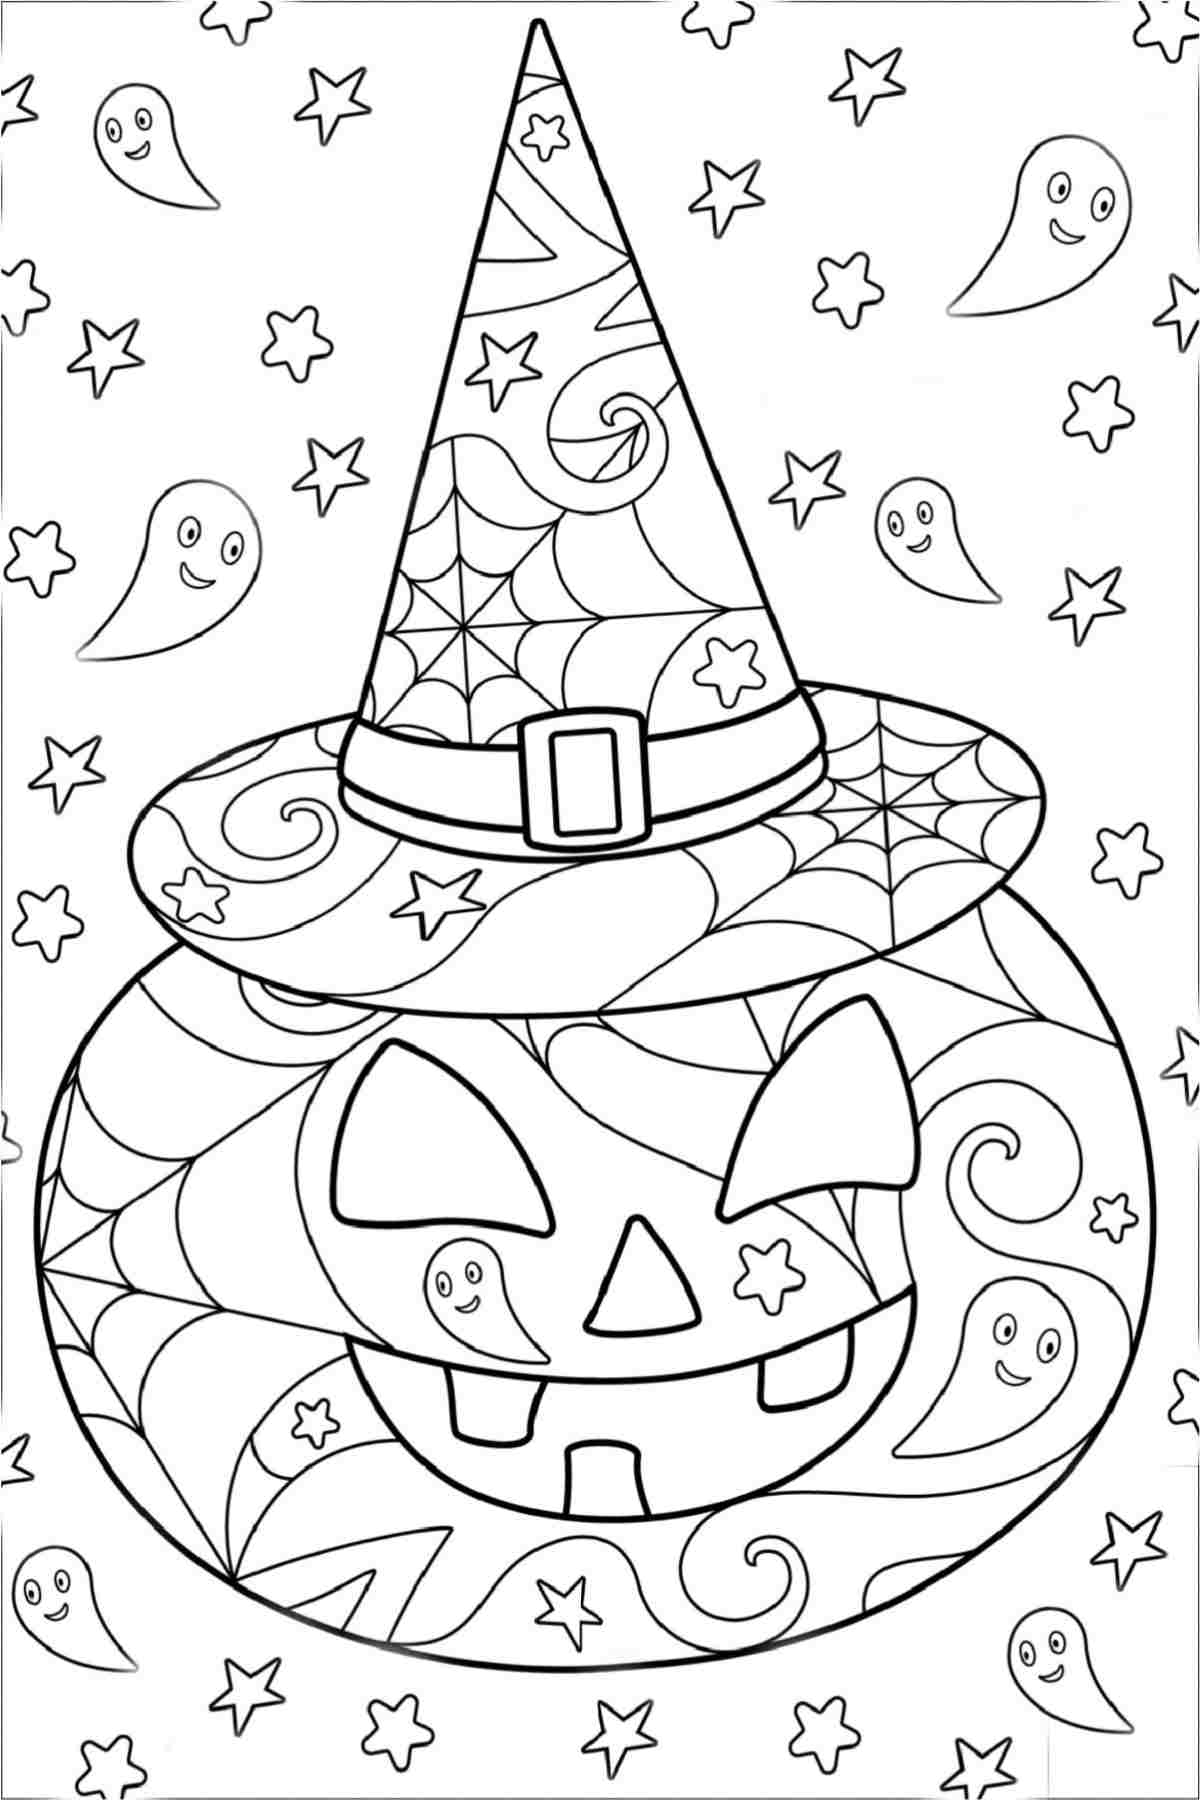 Get jack o lantern coloring pages